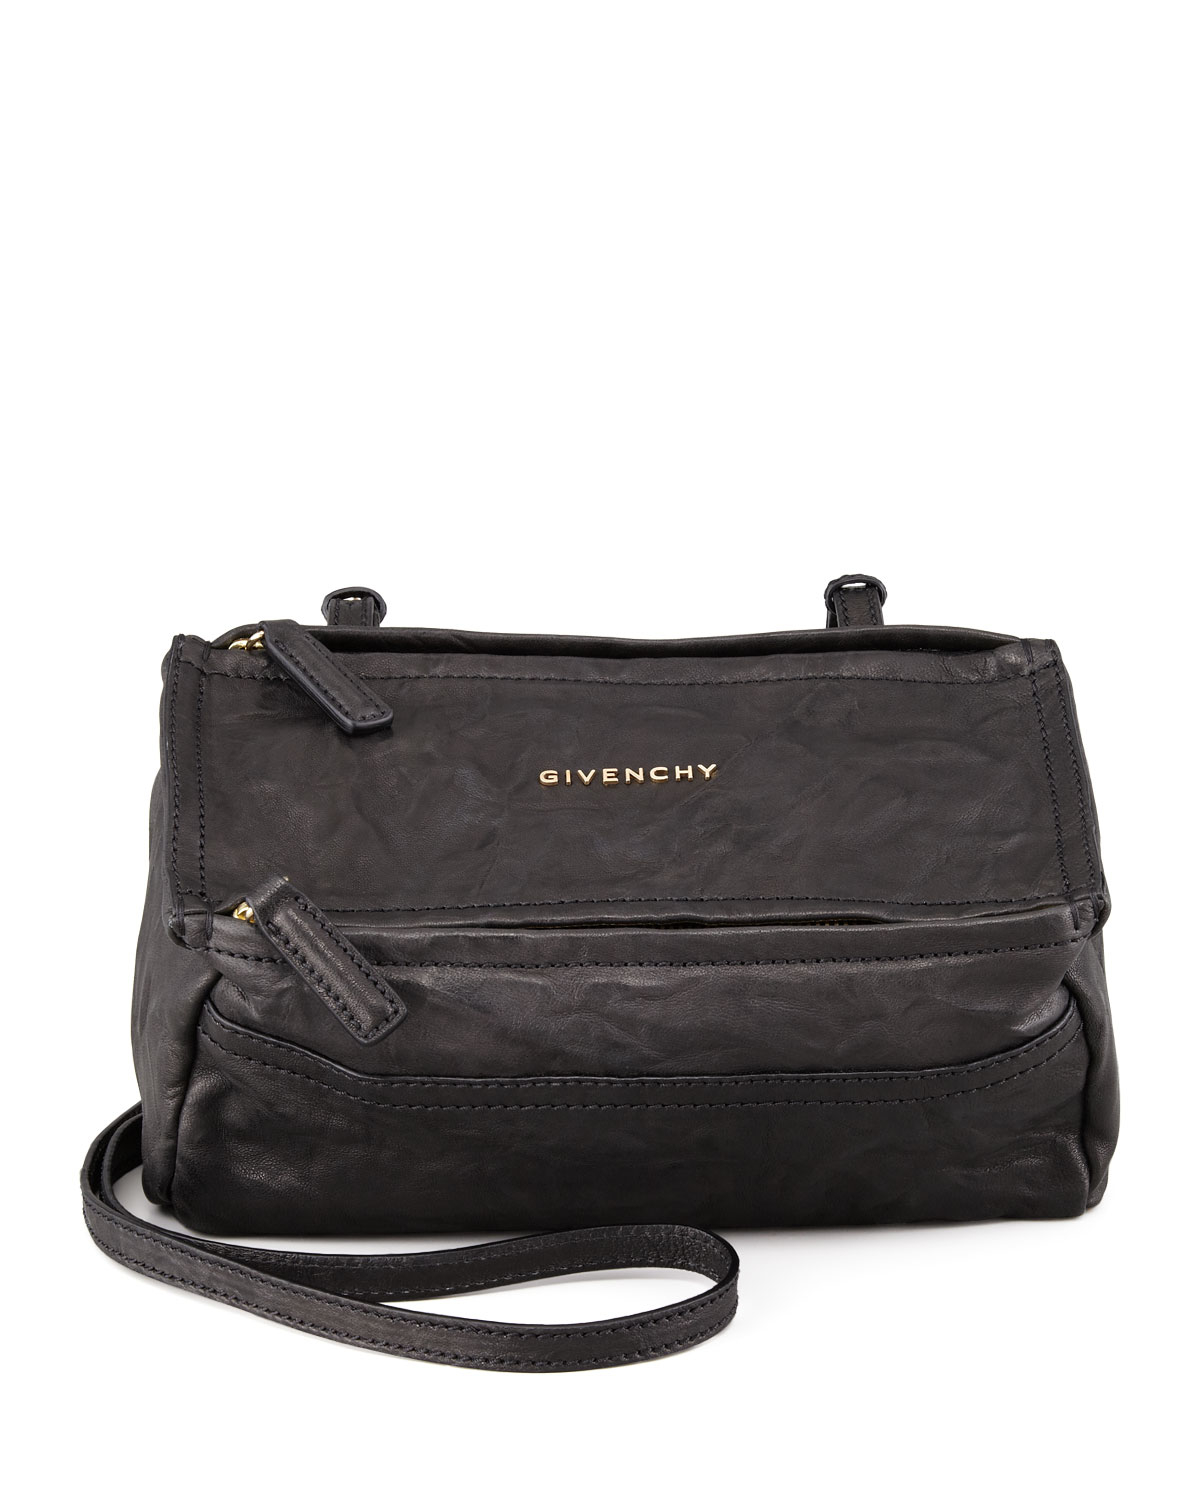 Givenchy Pandora Mini Leather Crossbody Bag in Black | Lyst